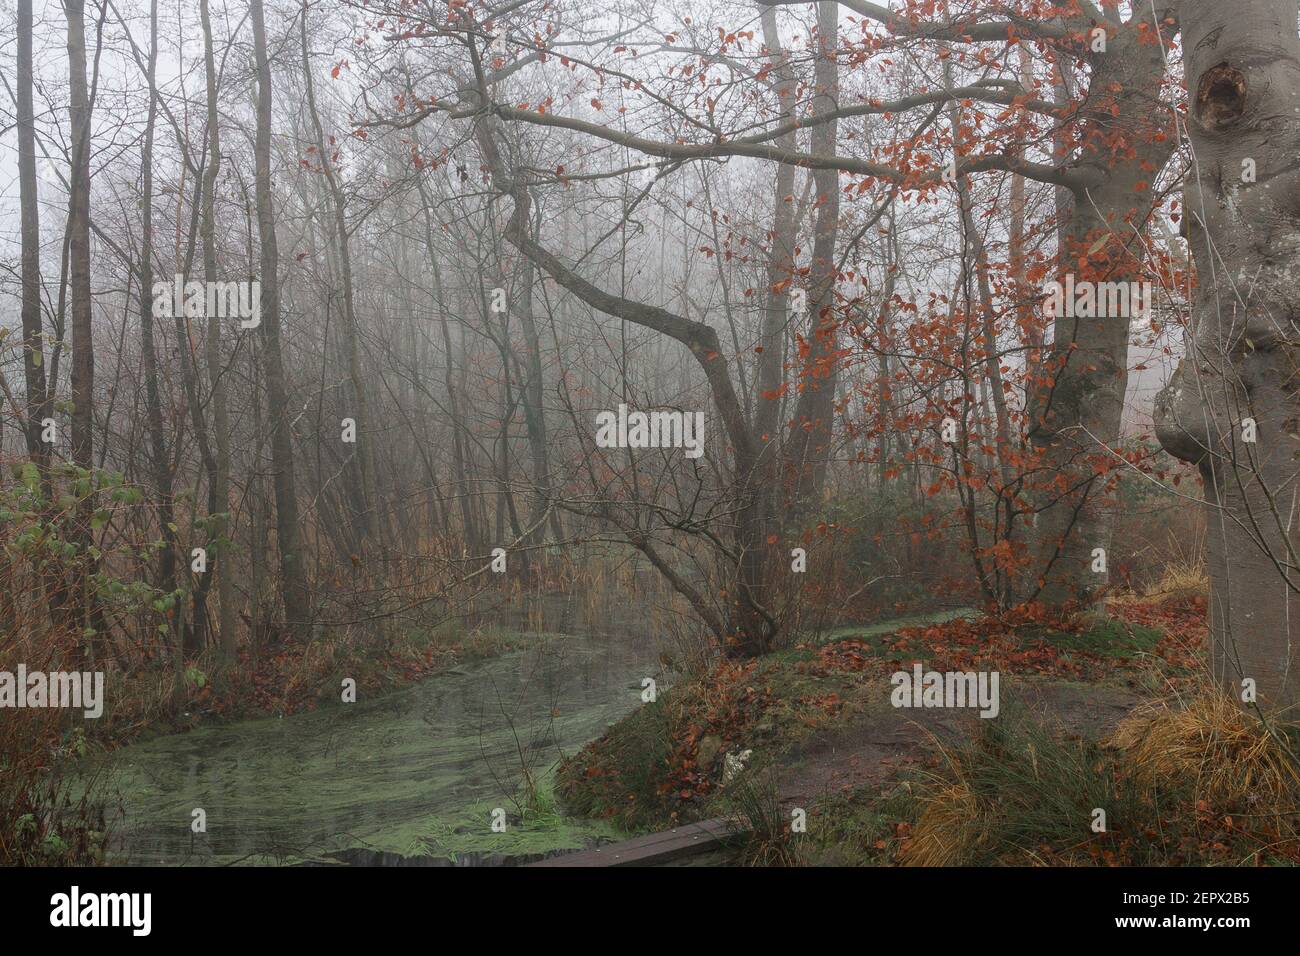 Face shaped beech tree overlooking a still pond on a misty autumn morning. Stock Photo